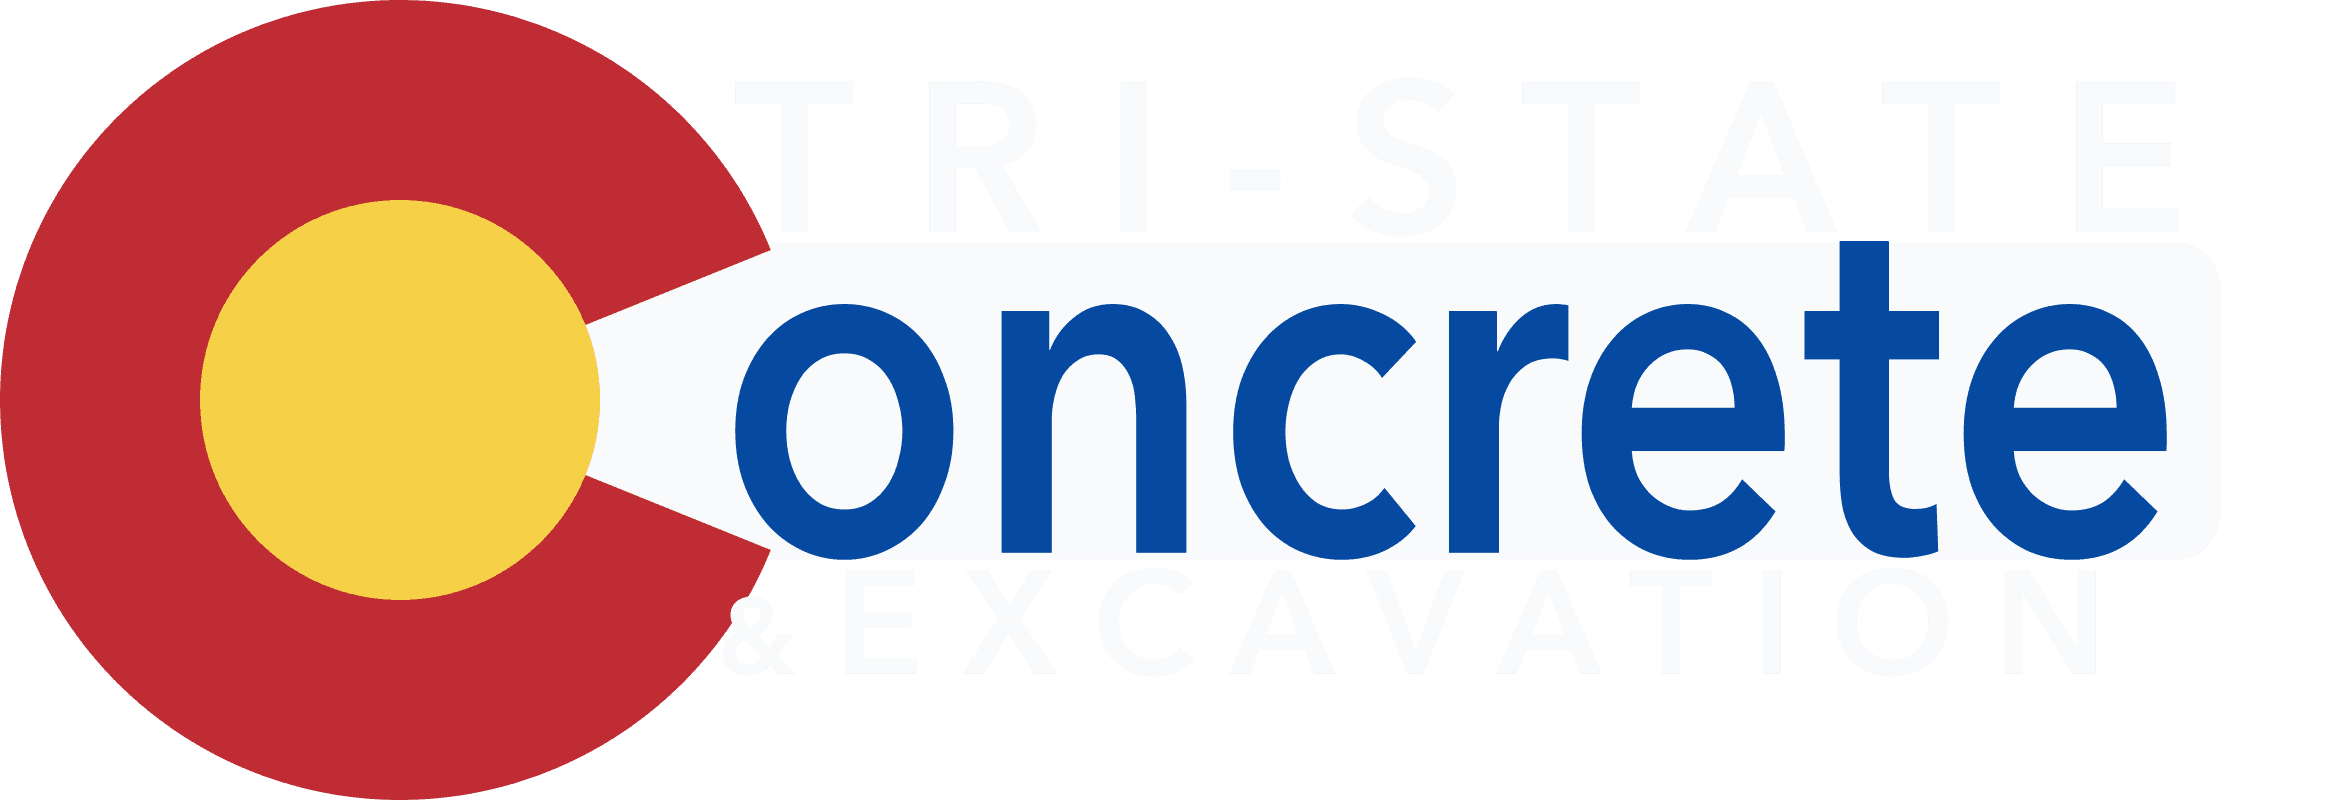 Tristate Concrete & Excavation logo